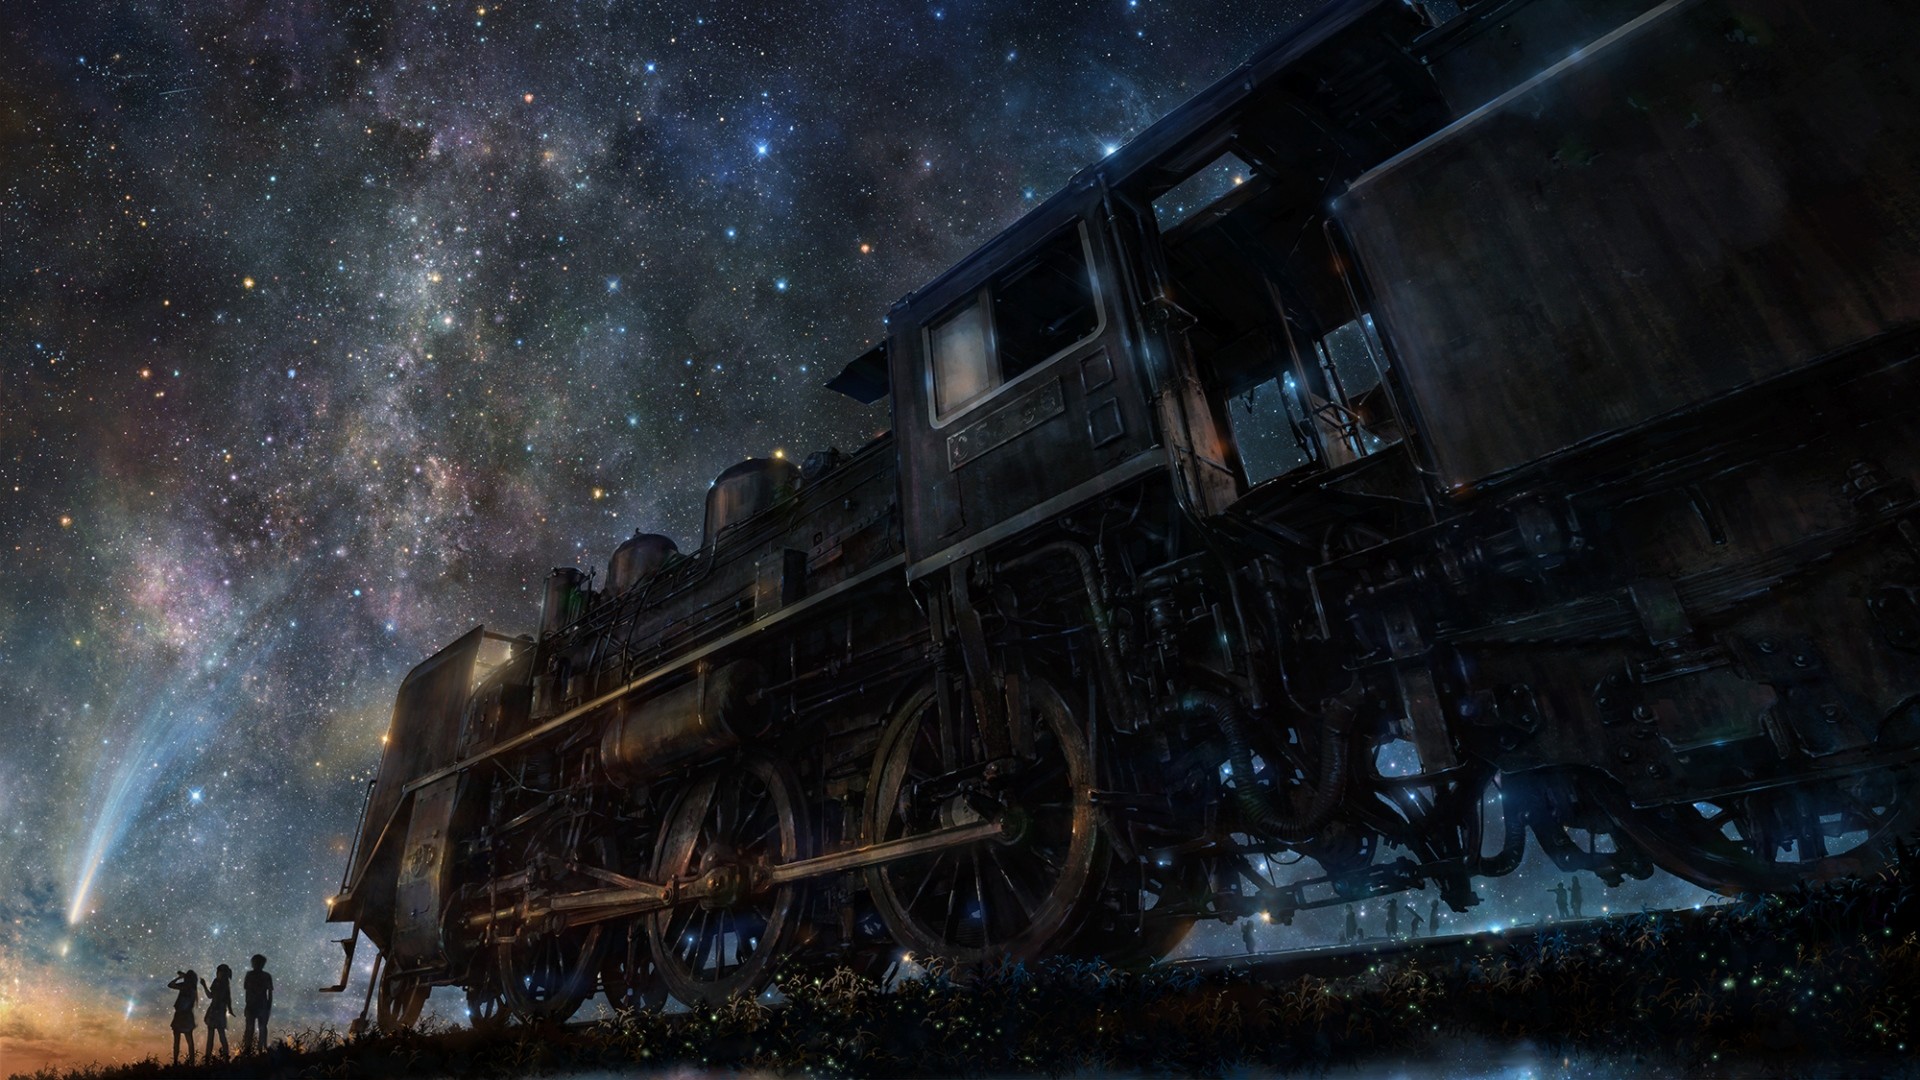 1920x1080  Wallpaper iy tujiki, art, night, train, anime, starry sky